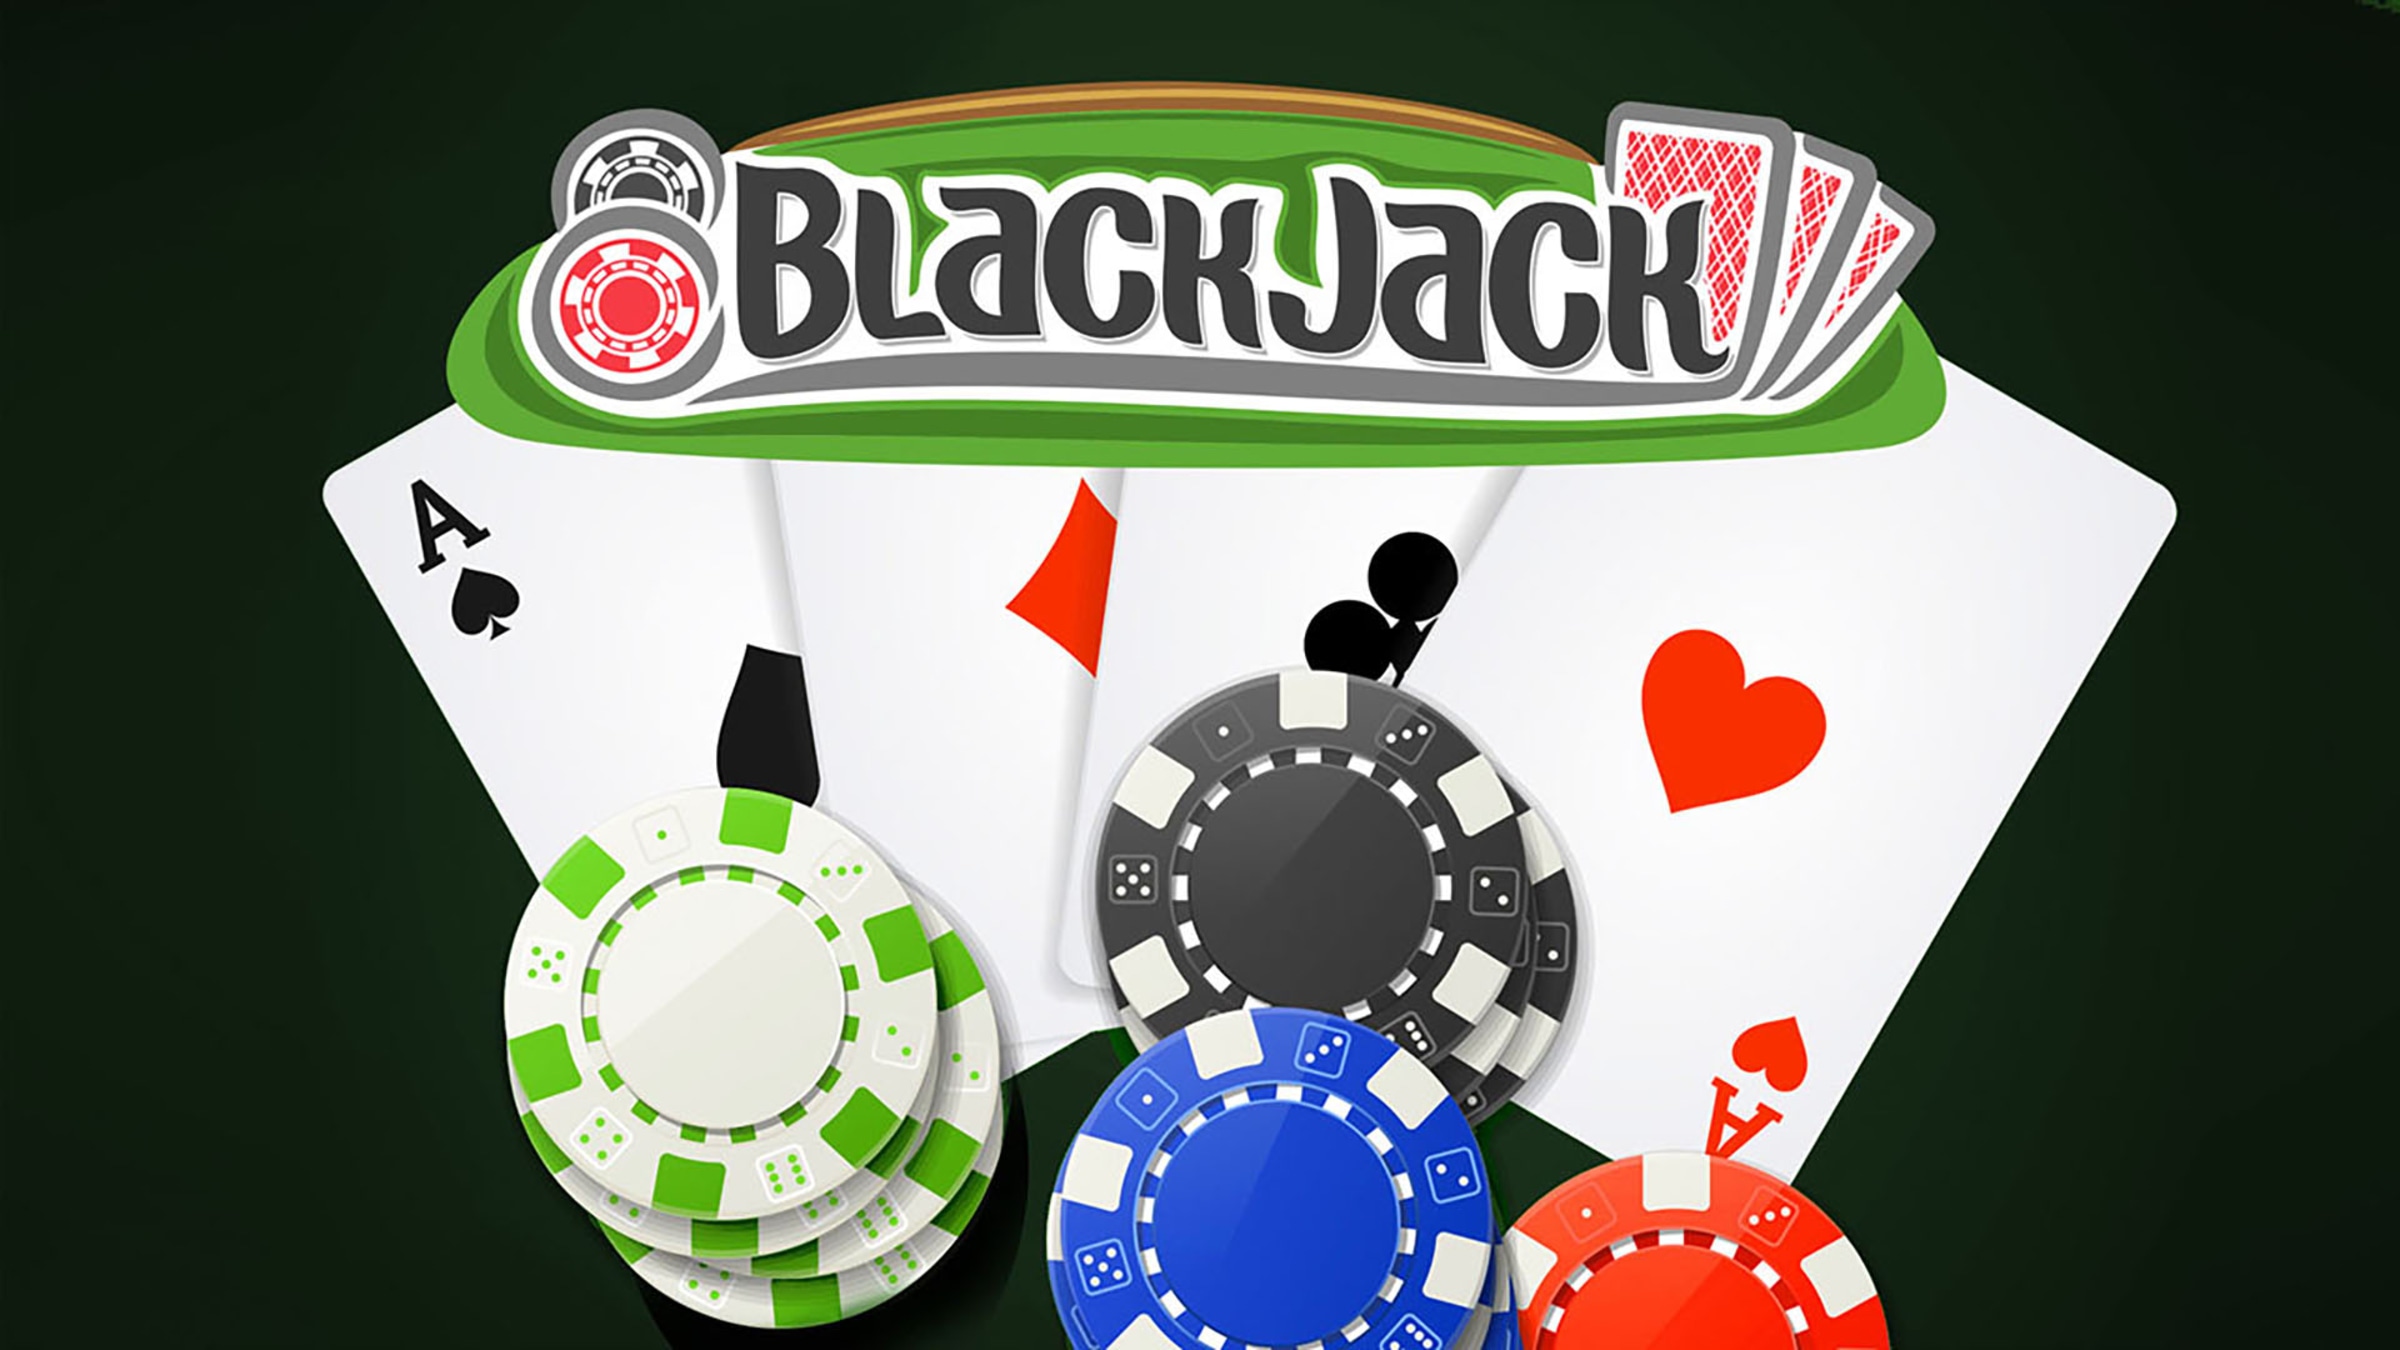 Blackjack Switch Online